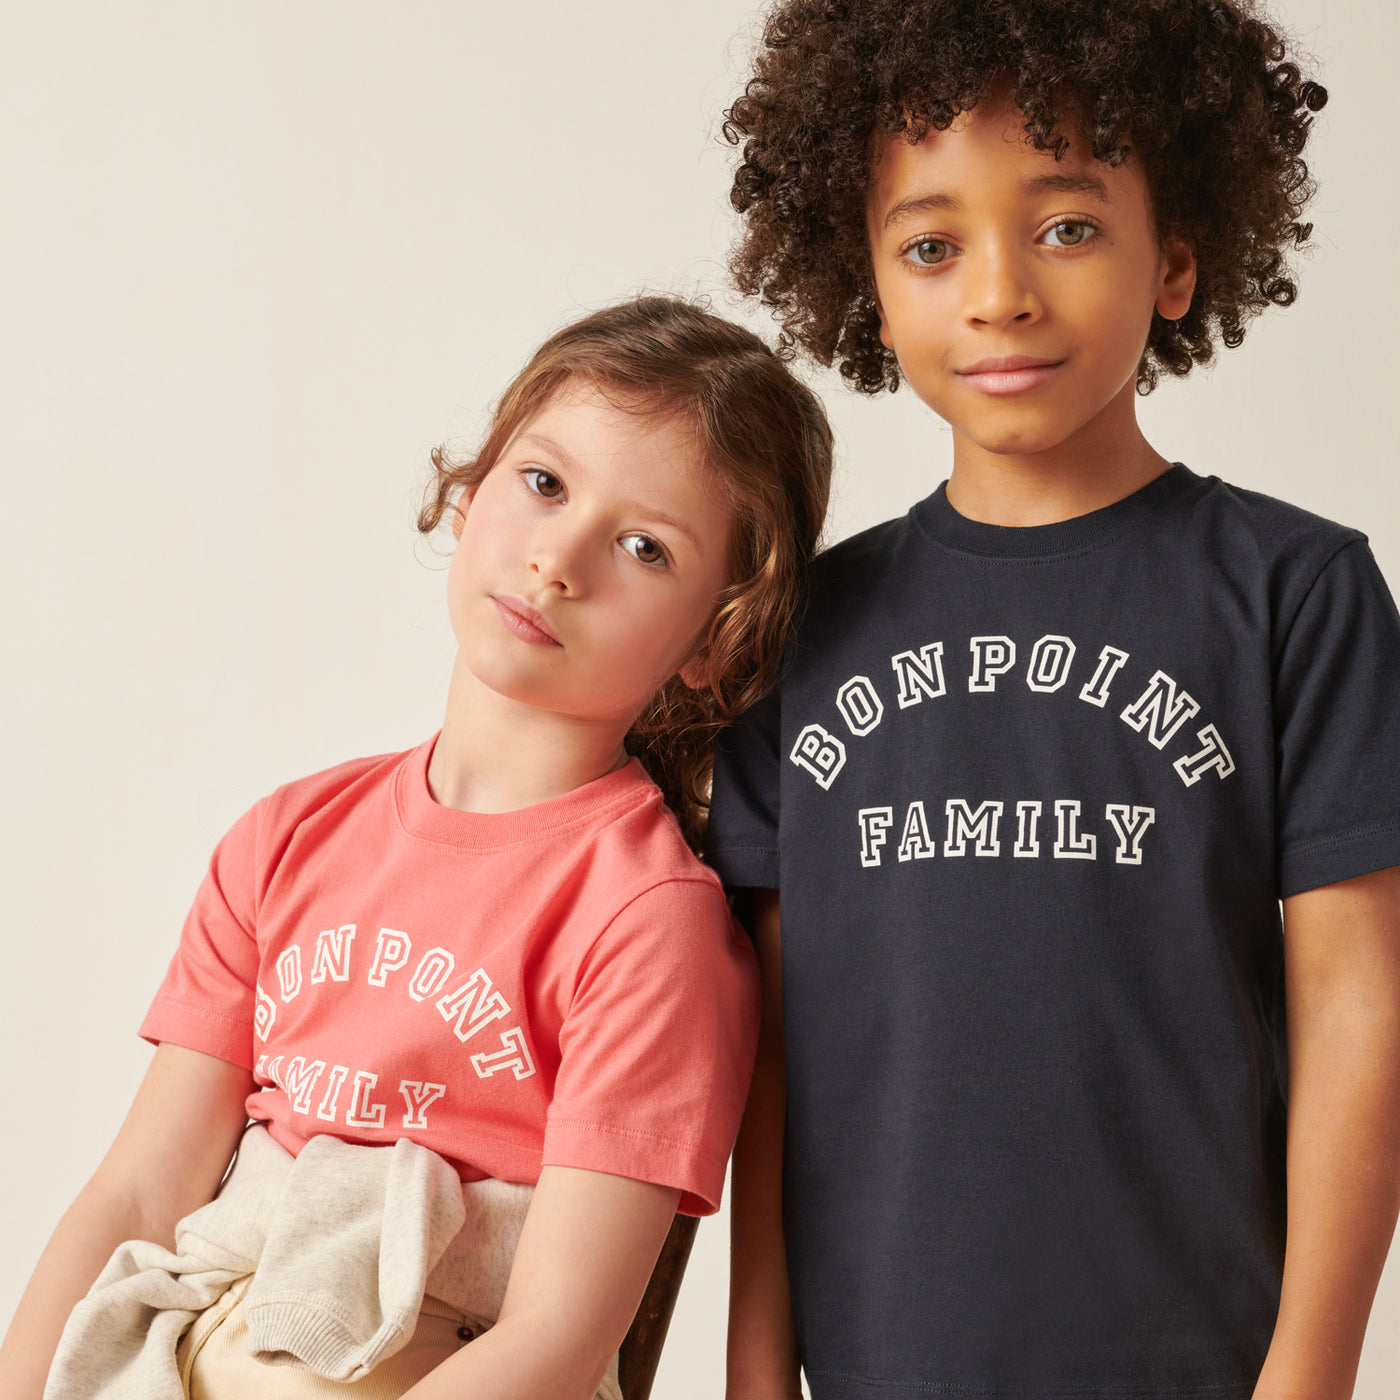 fille et garcon en t-shirt avec logo bonpoint family 